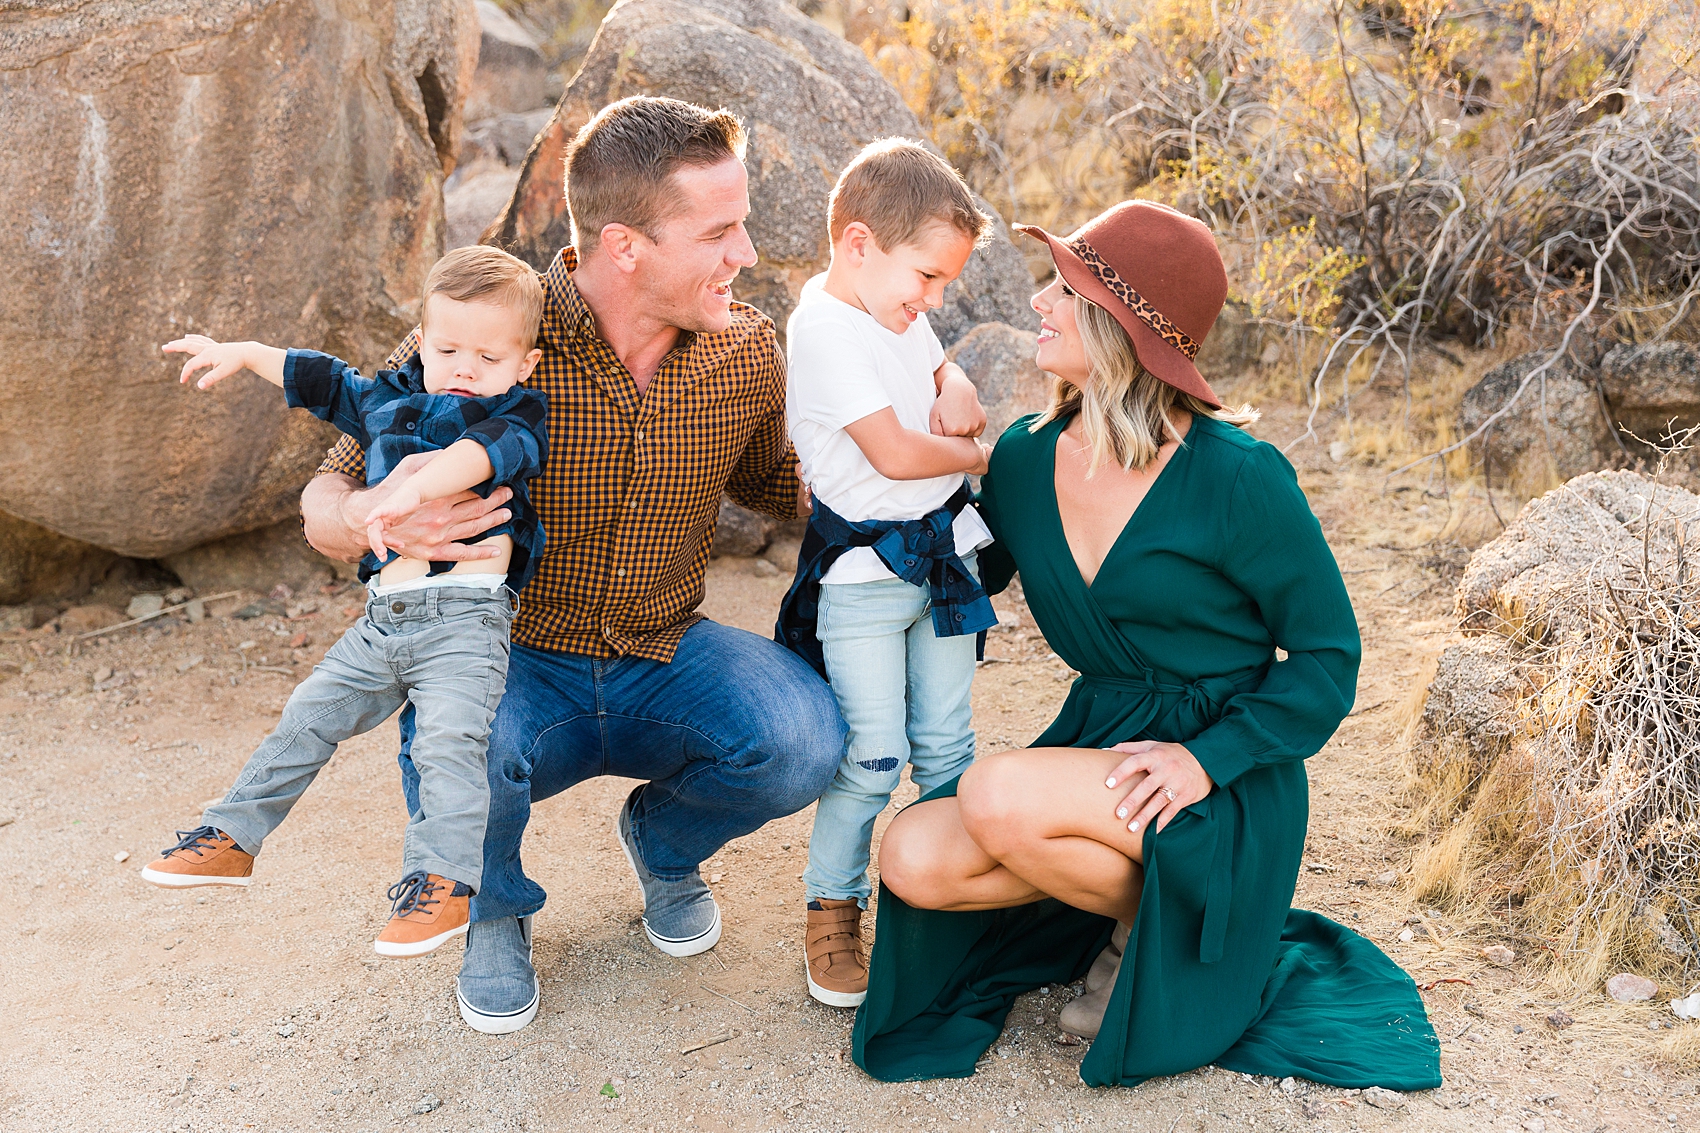 Leah Hope Photography | Scottsdale Phoenix Arizona | Desert Landscape Cactus Boulders Scenery | Family Picutres | What to Wear | Family Poses | Family Photos